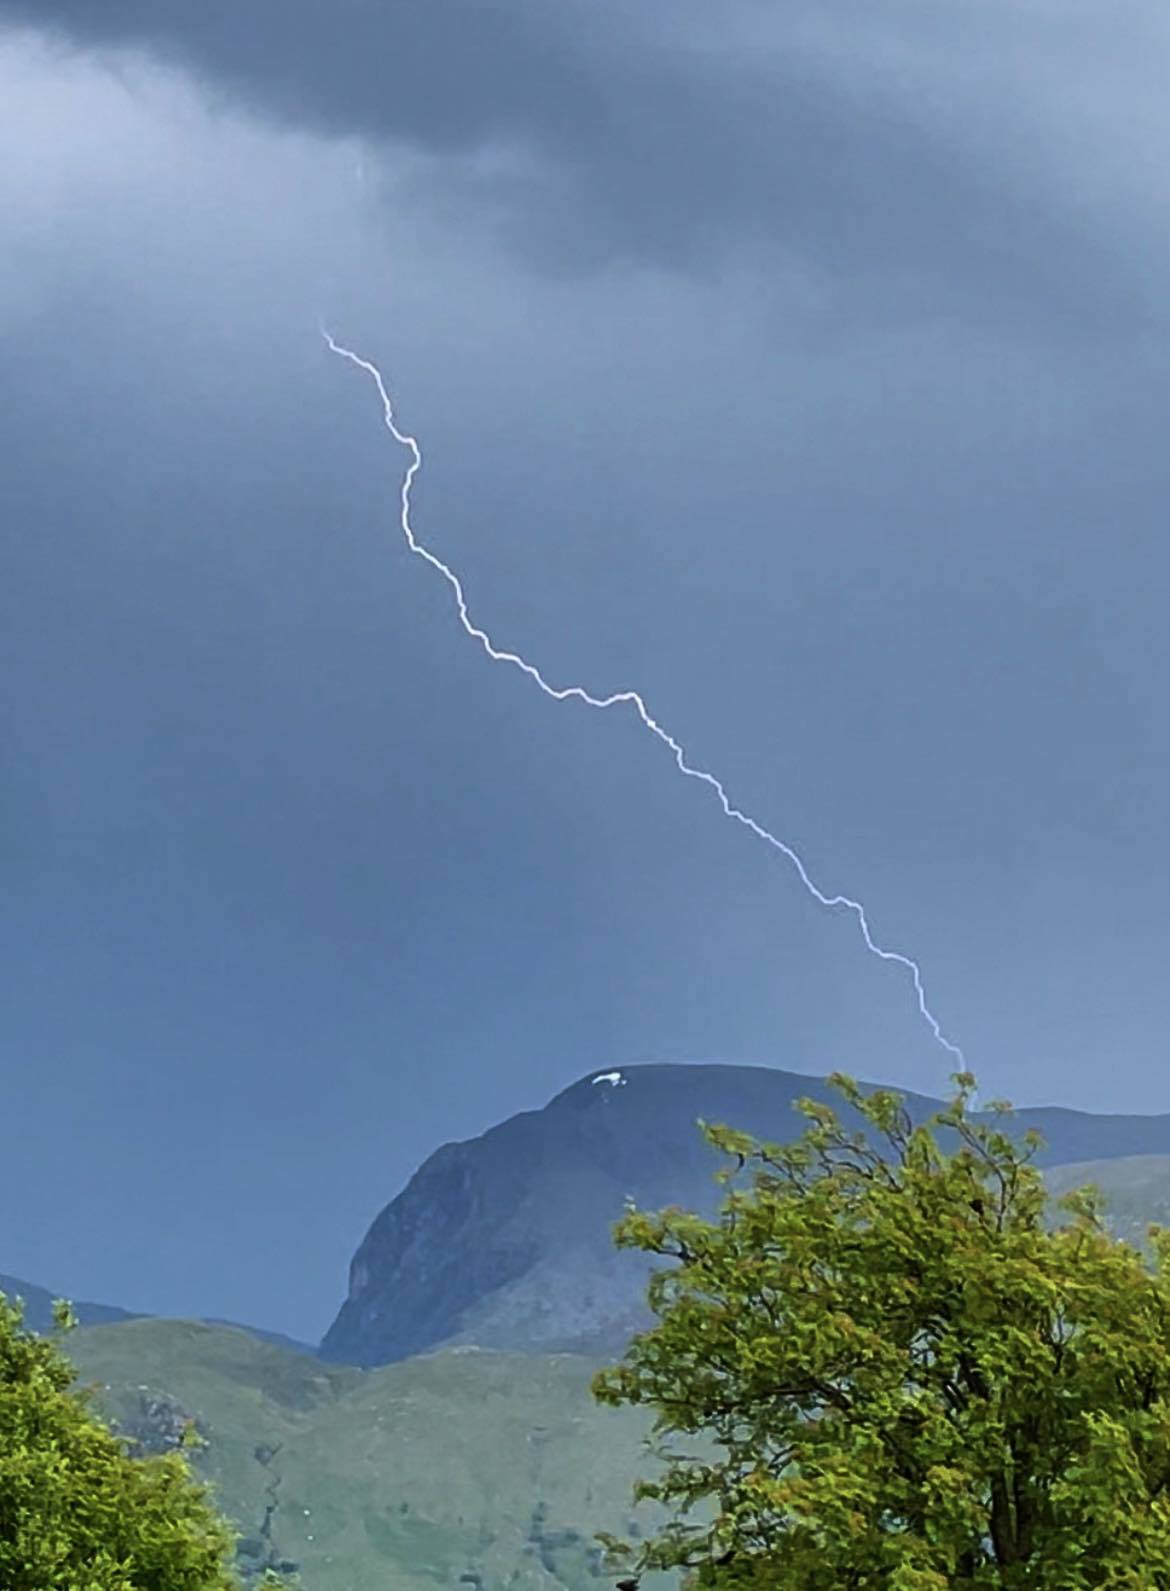 Lightning striking Ben Nevis captured on camera.